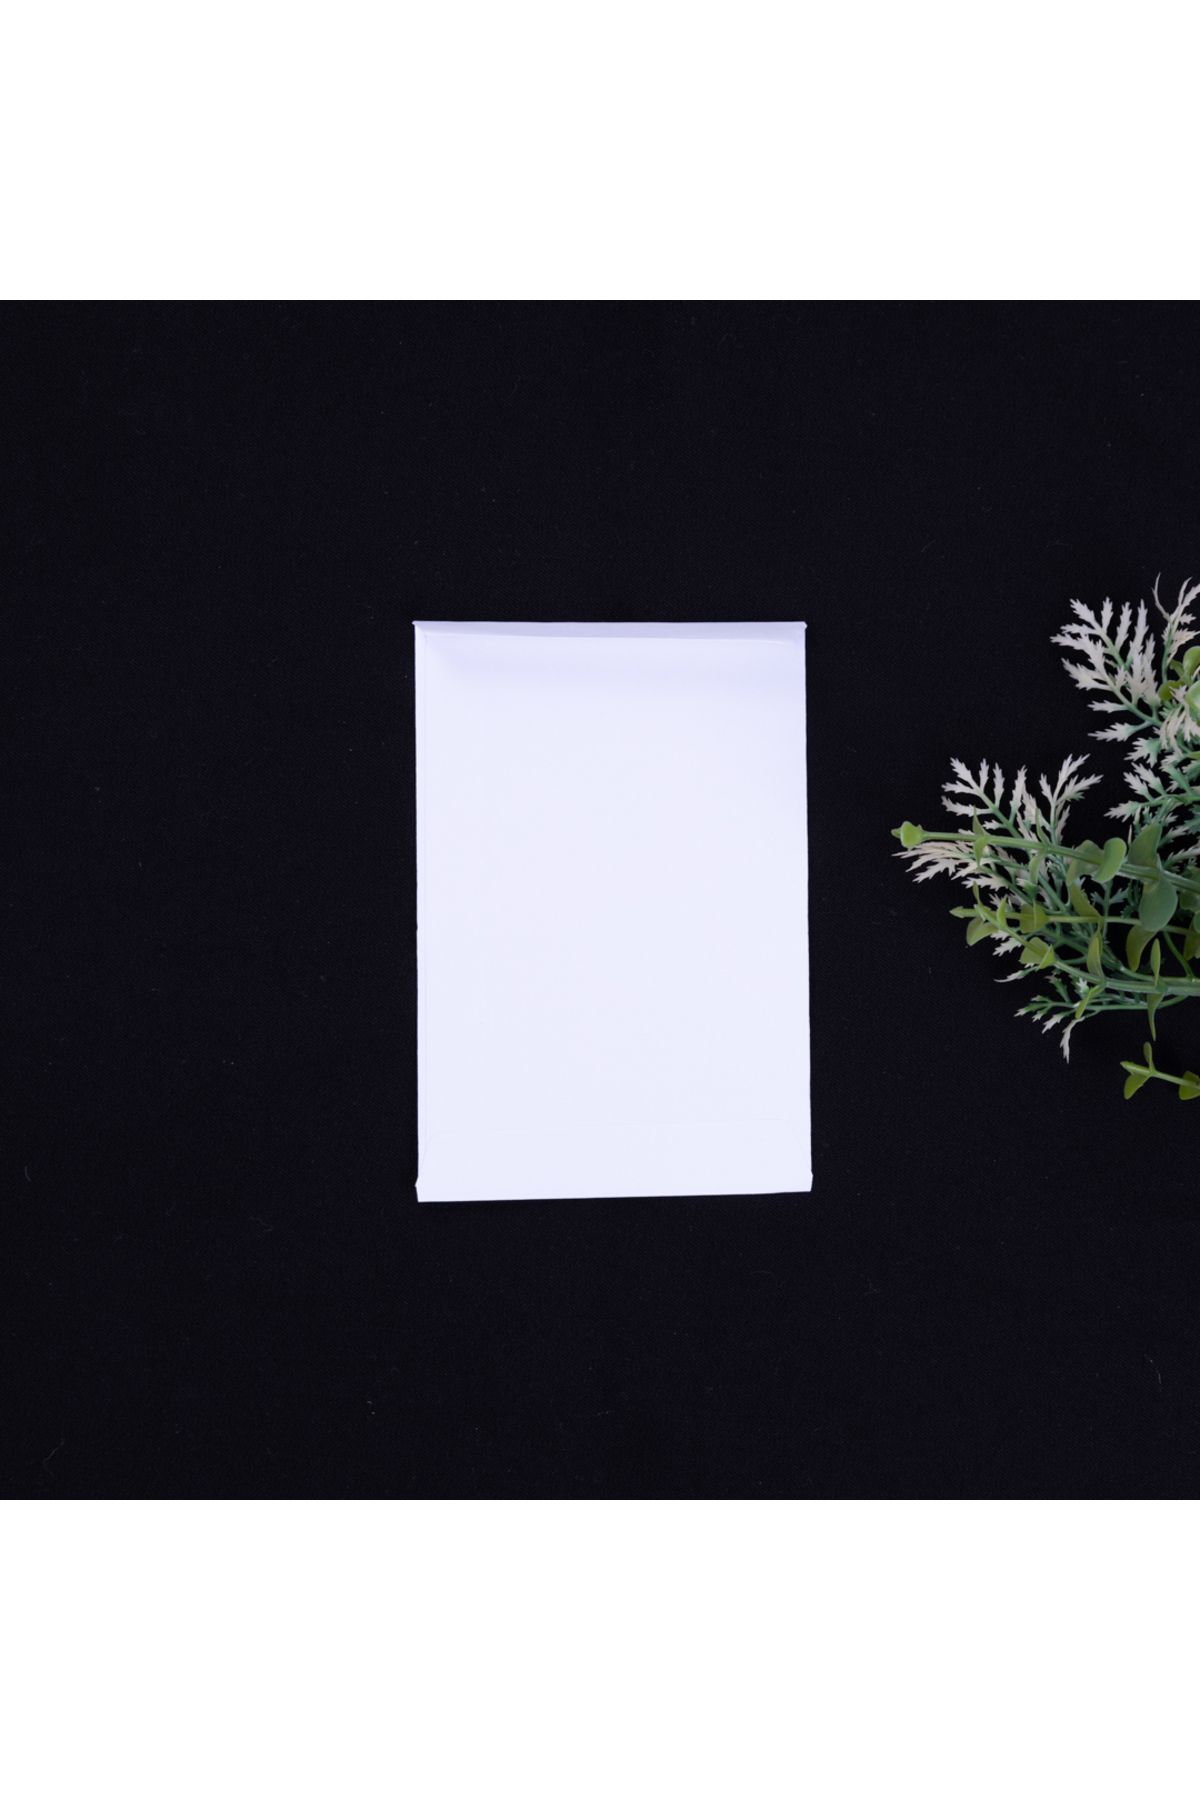 Bimotif Beyaz Zarf, 9x13 Cm 10 Adet